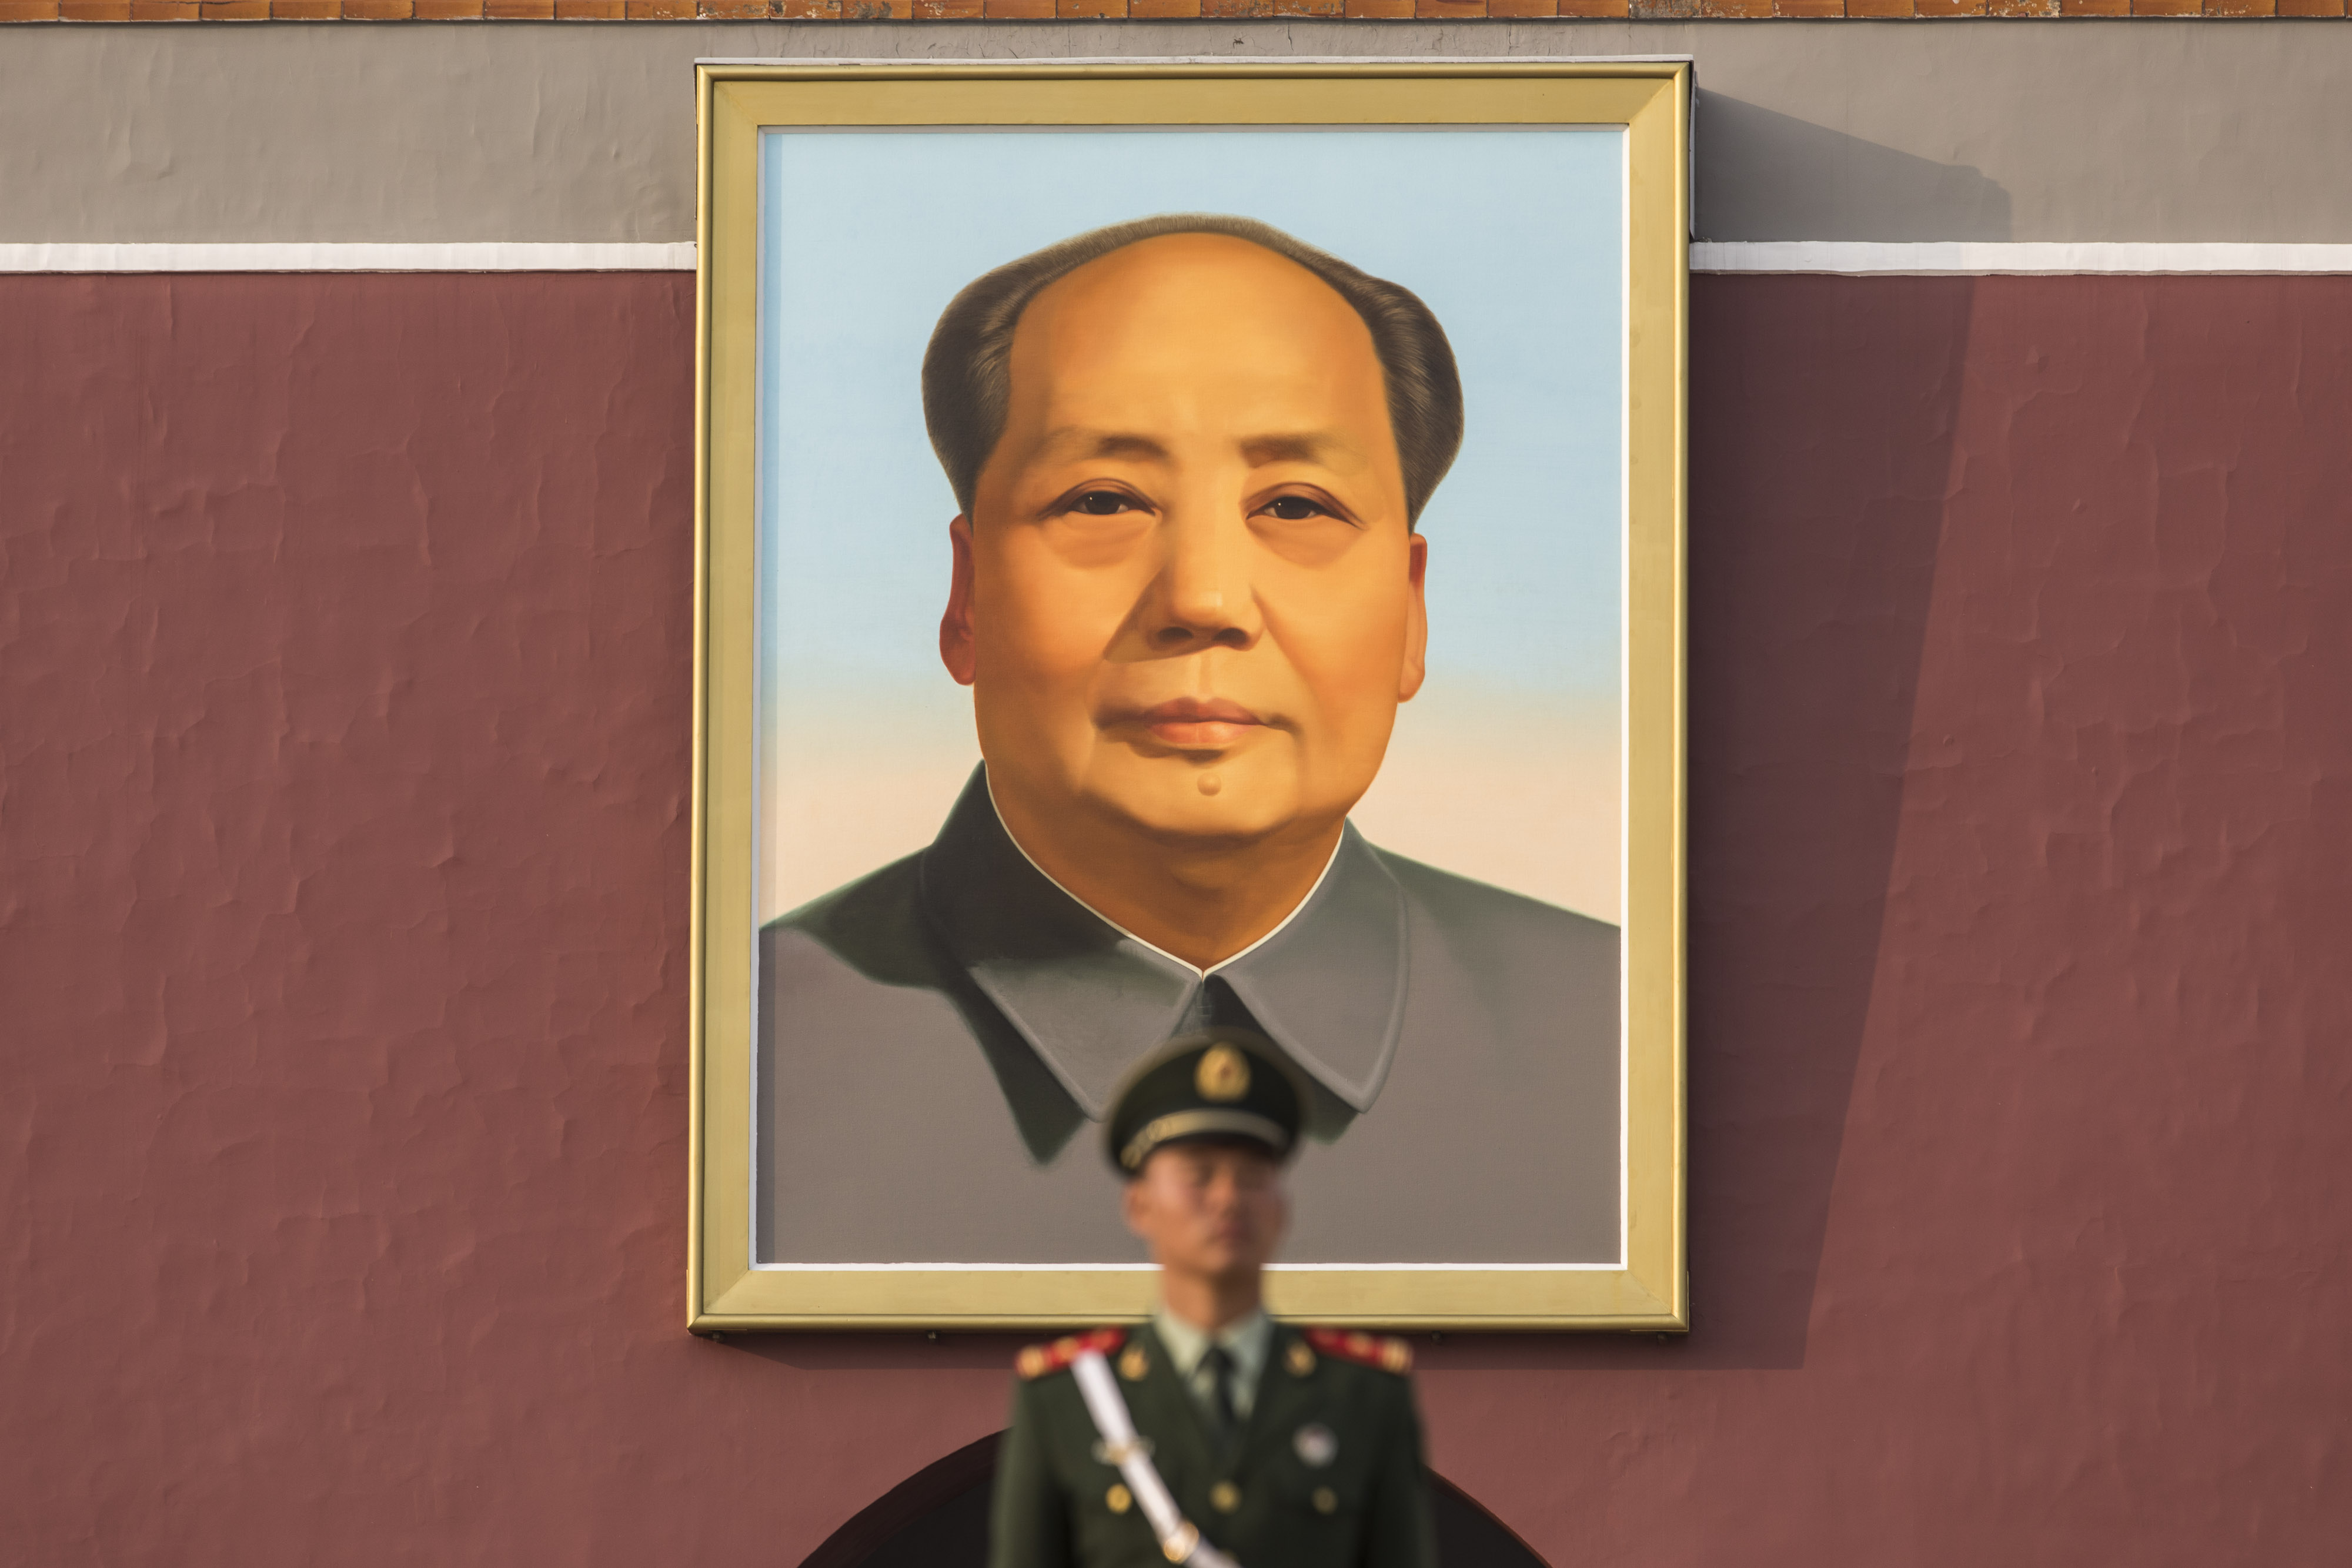 Vid 0408. Mao Zedong Mao портрет. Площадь Мао Цзэдуна. Мао Цзэдун и Хрущёв. Мао Цзэдун портрет в Пекине.